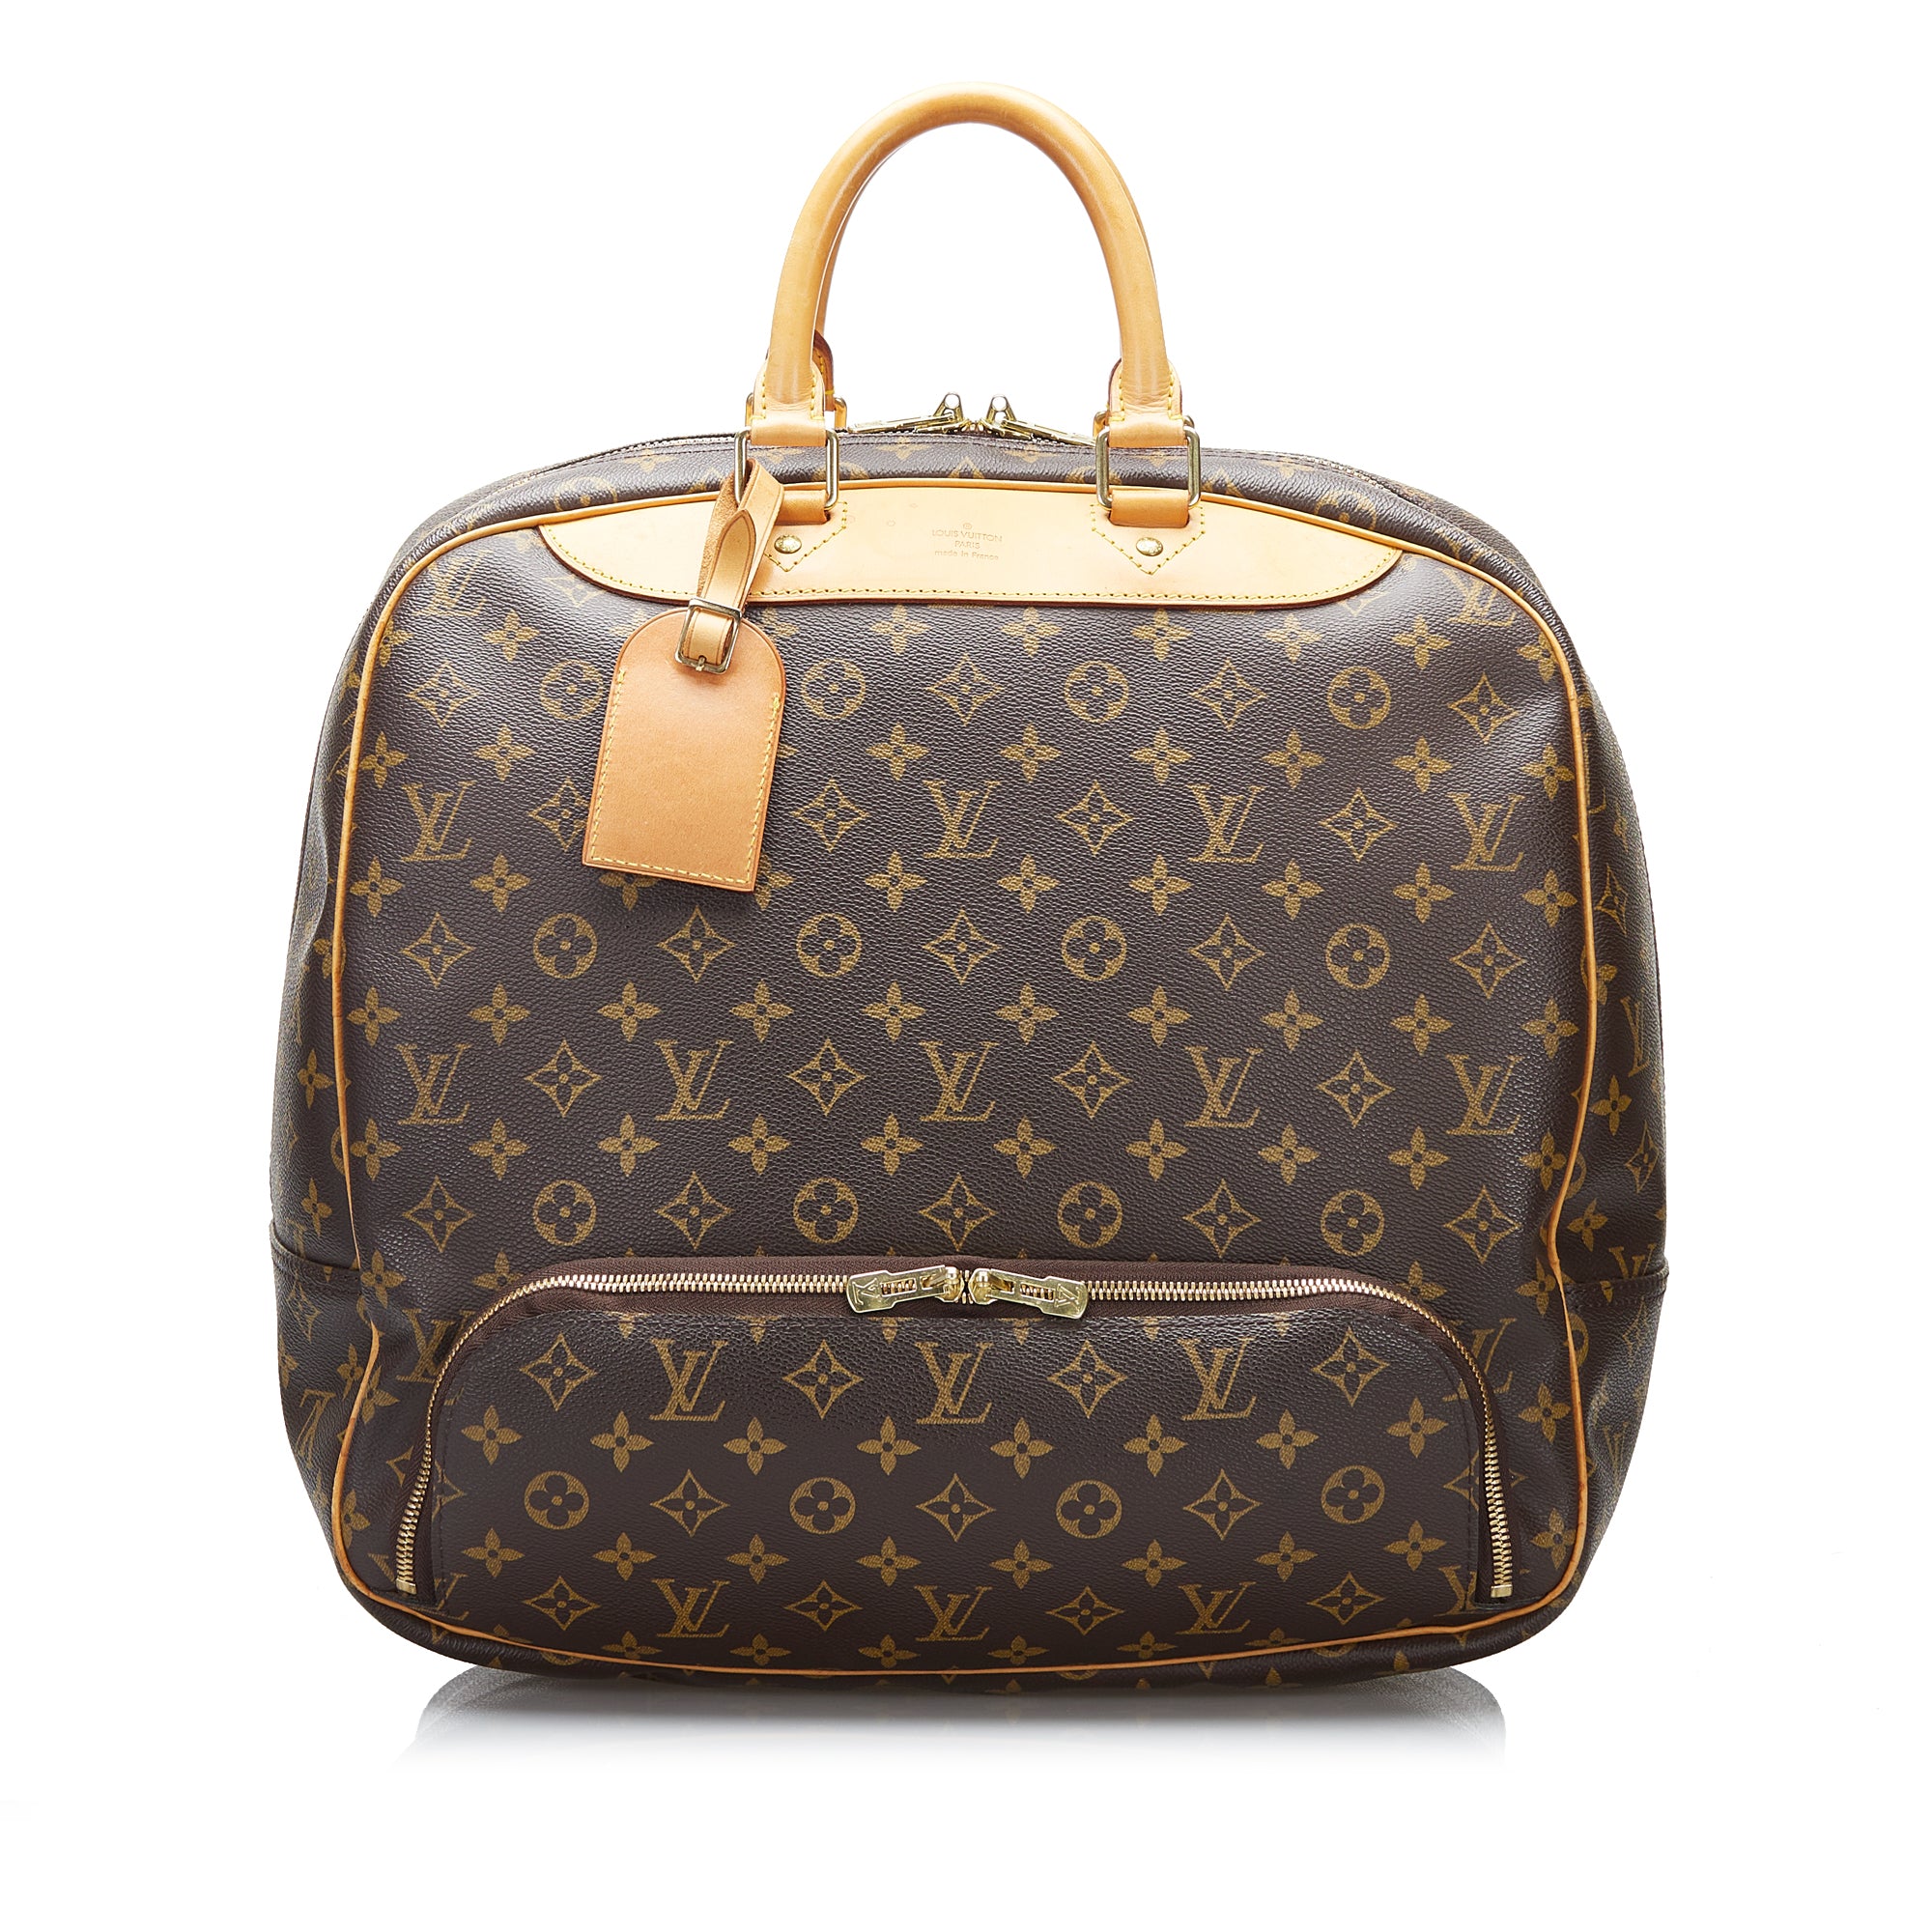 Louis Vuitton Monogram Sac Evasion Top Handle Travel Bag 80lz629s